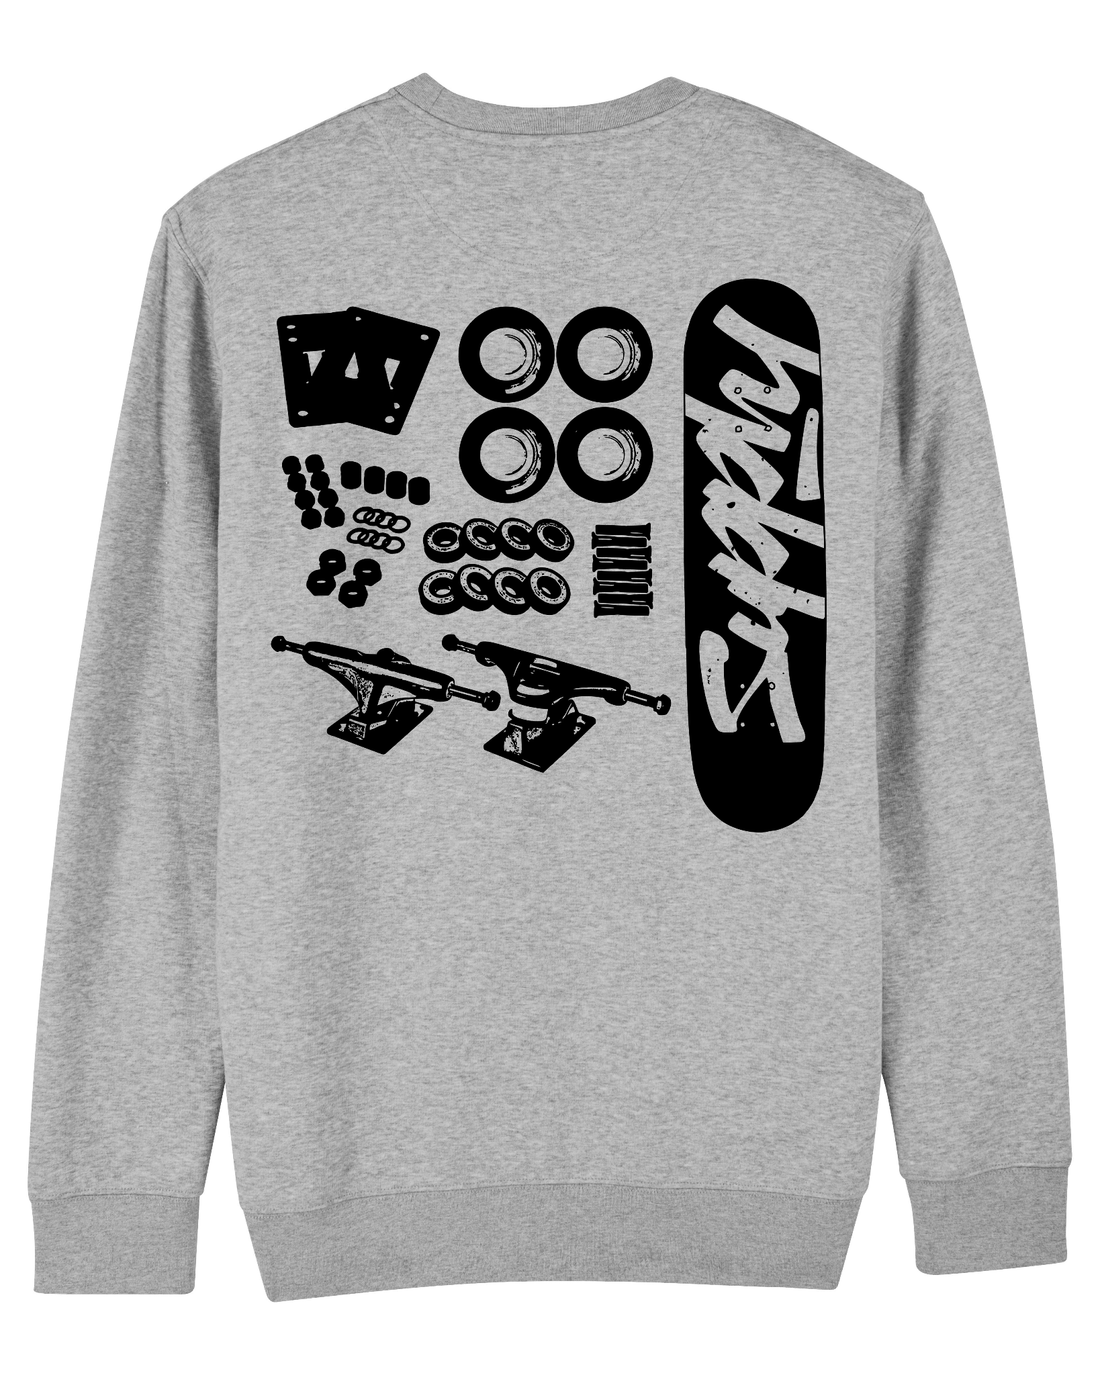 Grey Skater Sweatshirt, Skate Parts Back Print